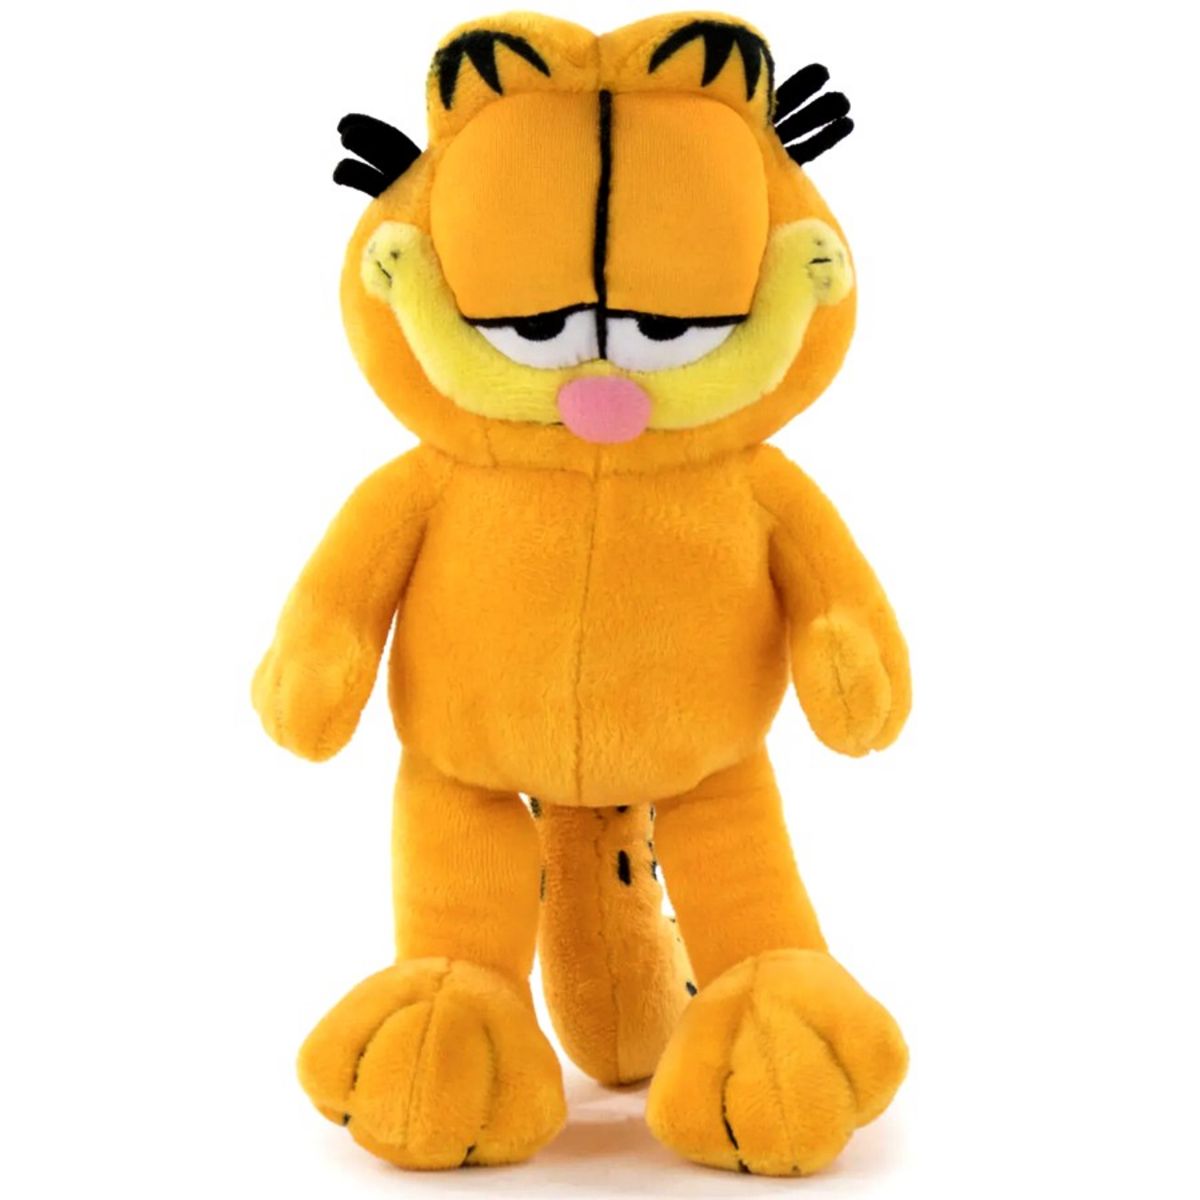 Universal - Peluche Garfield chat peluche peluche poupée peluche